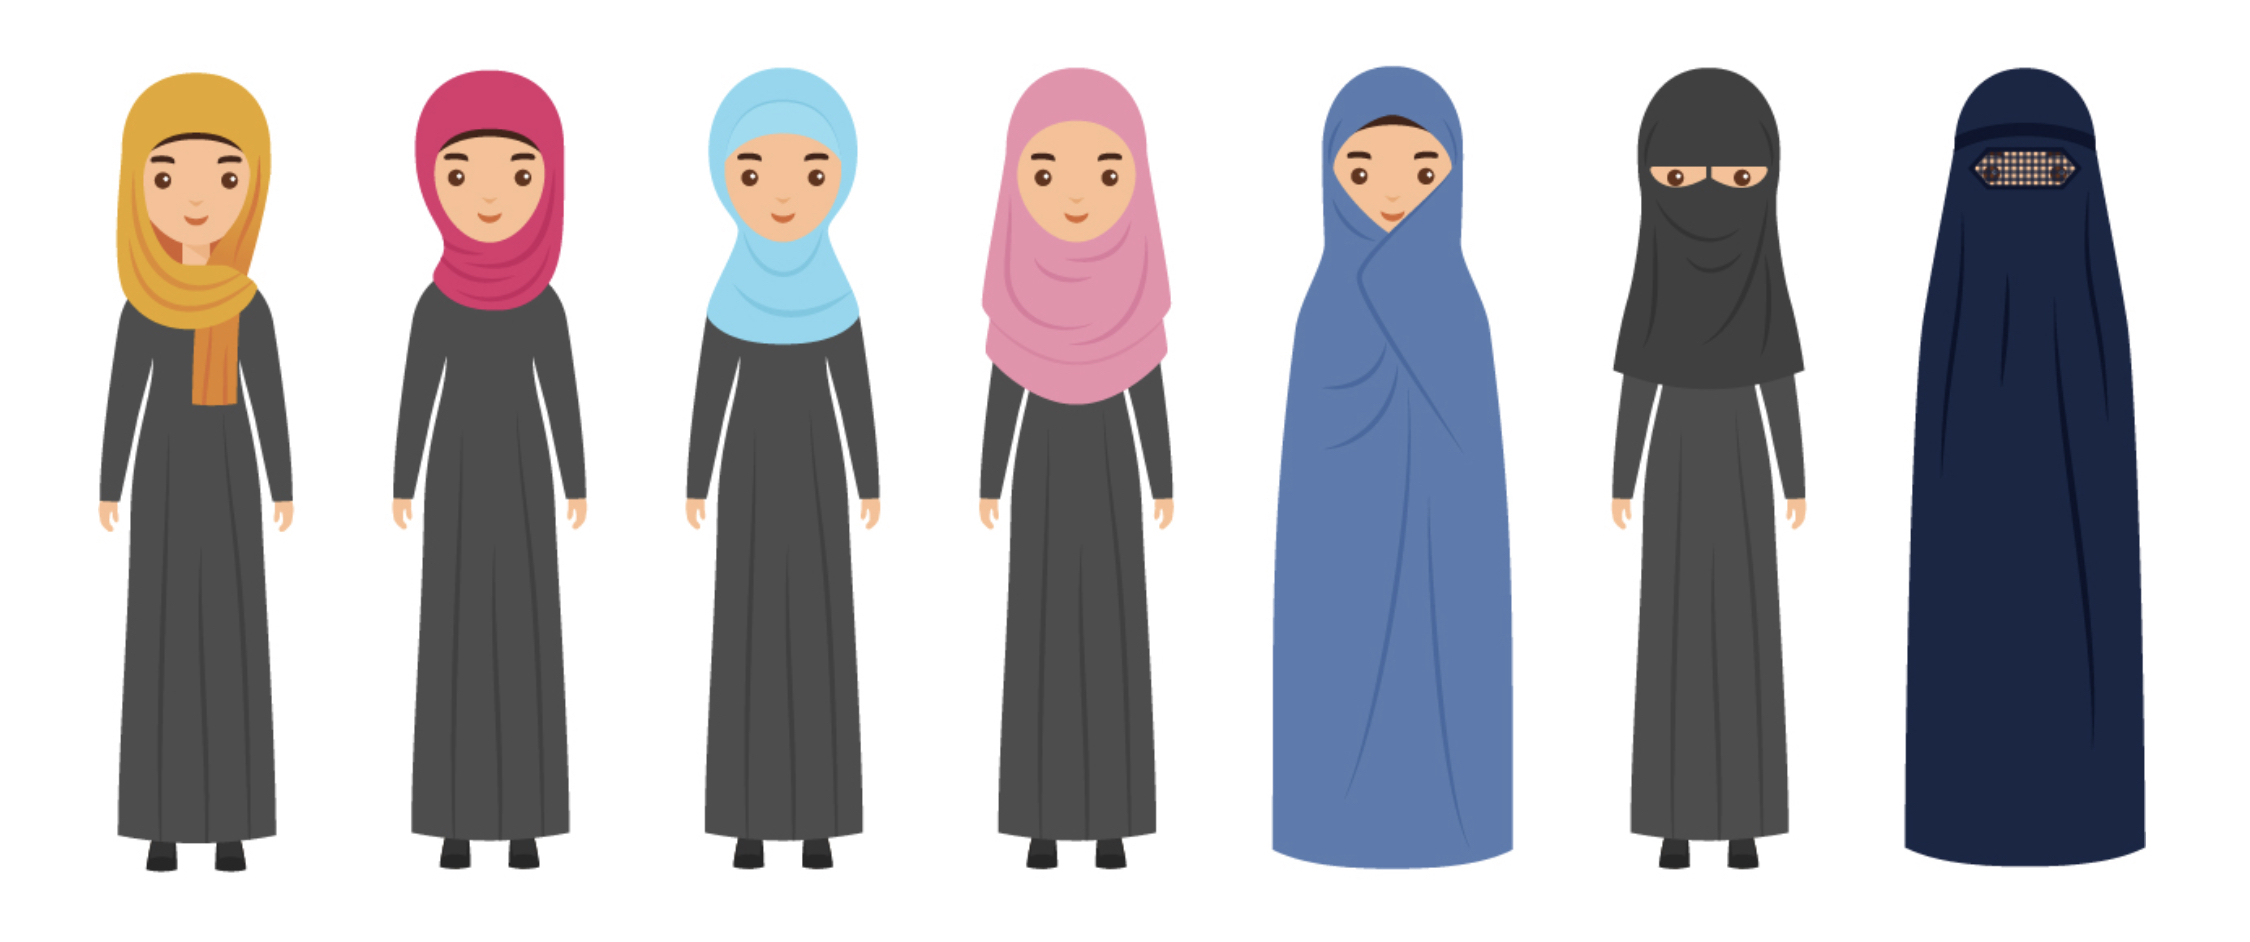 Types-of-veils